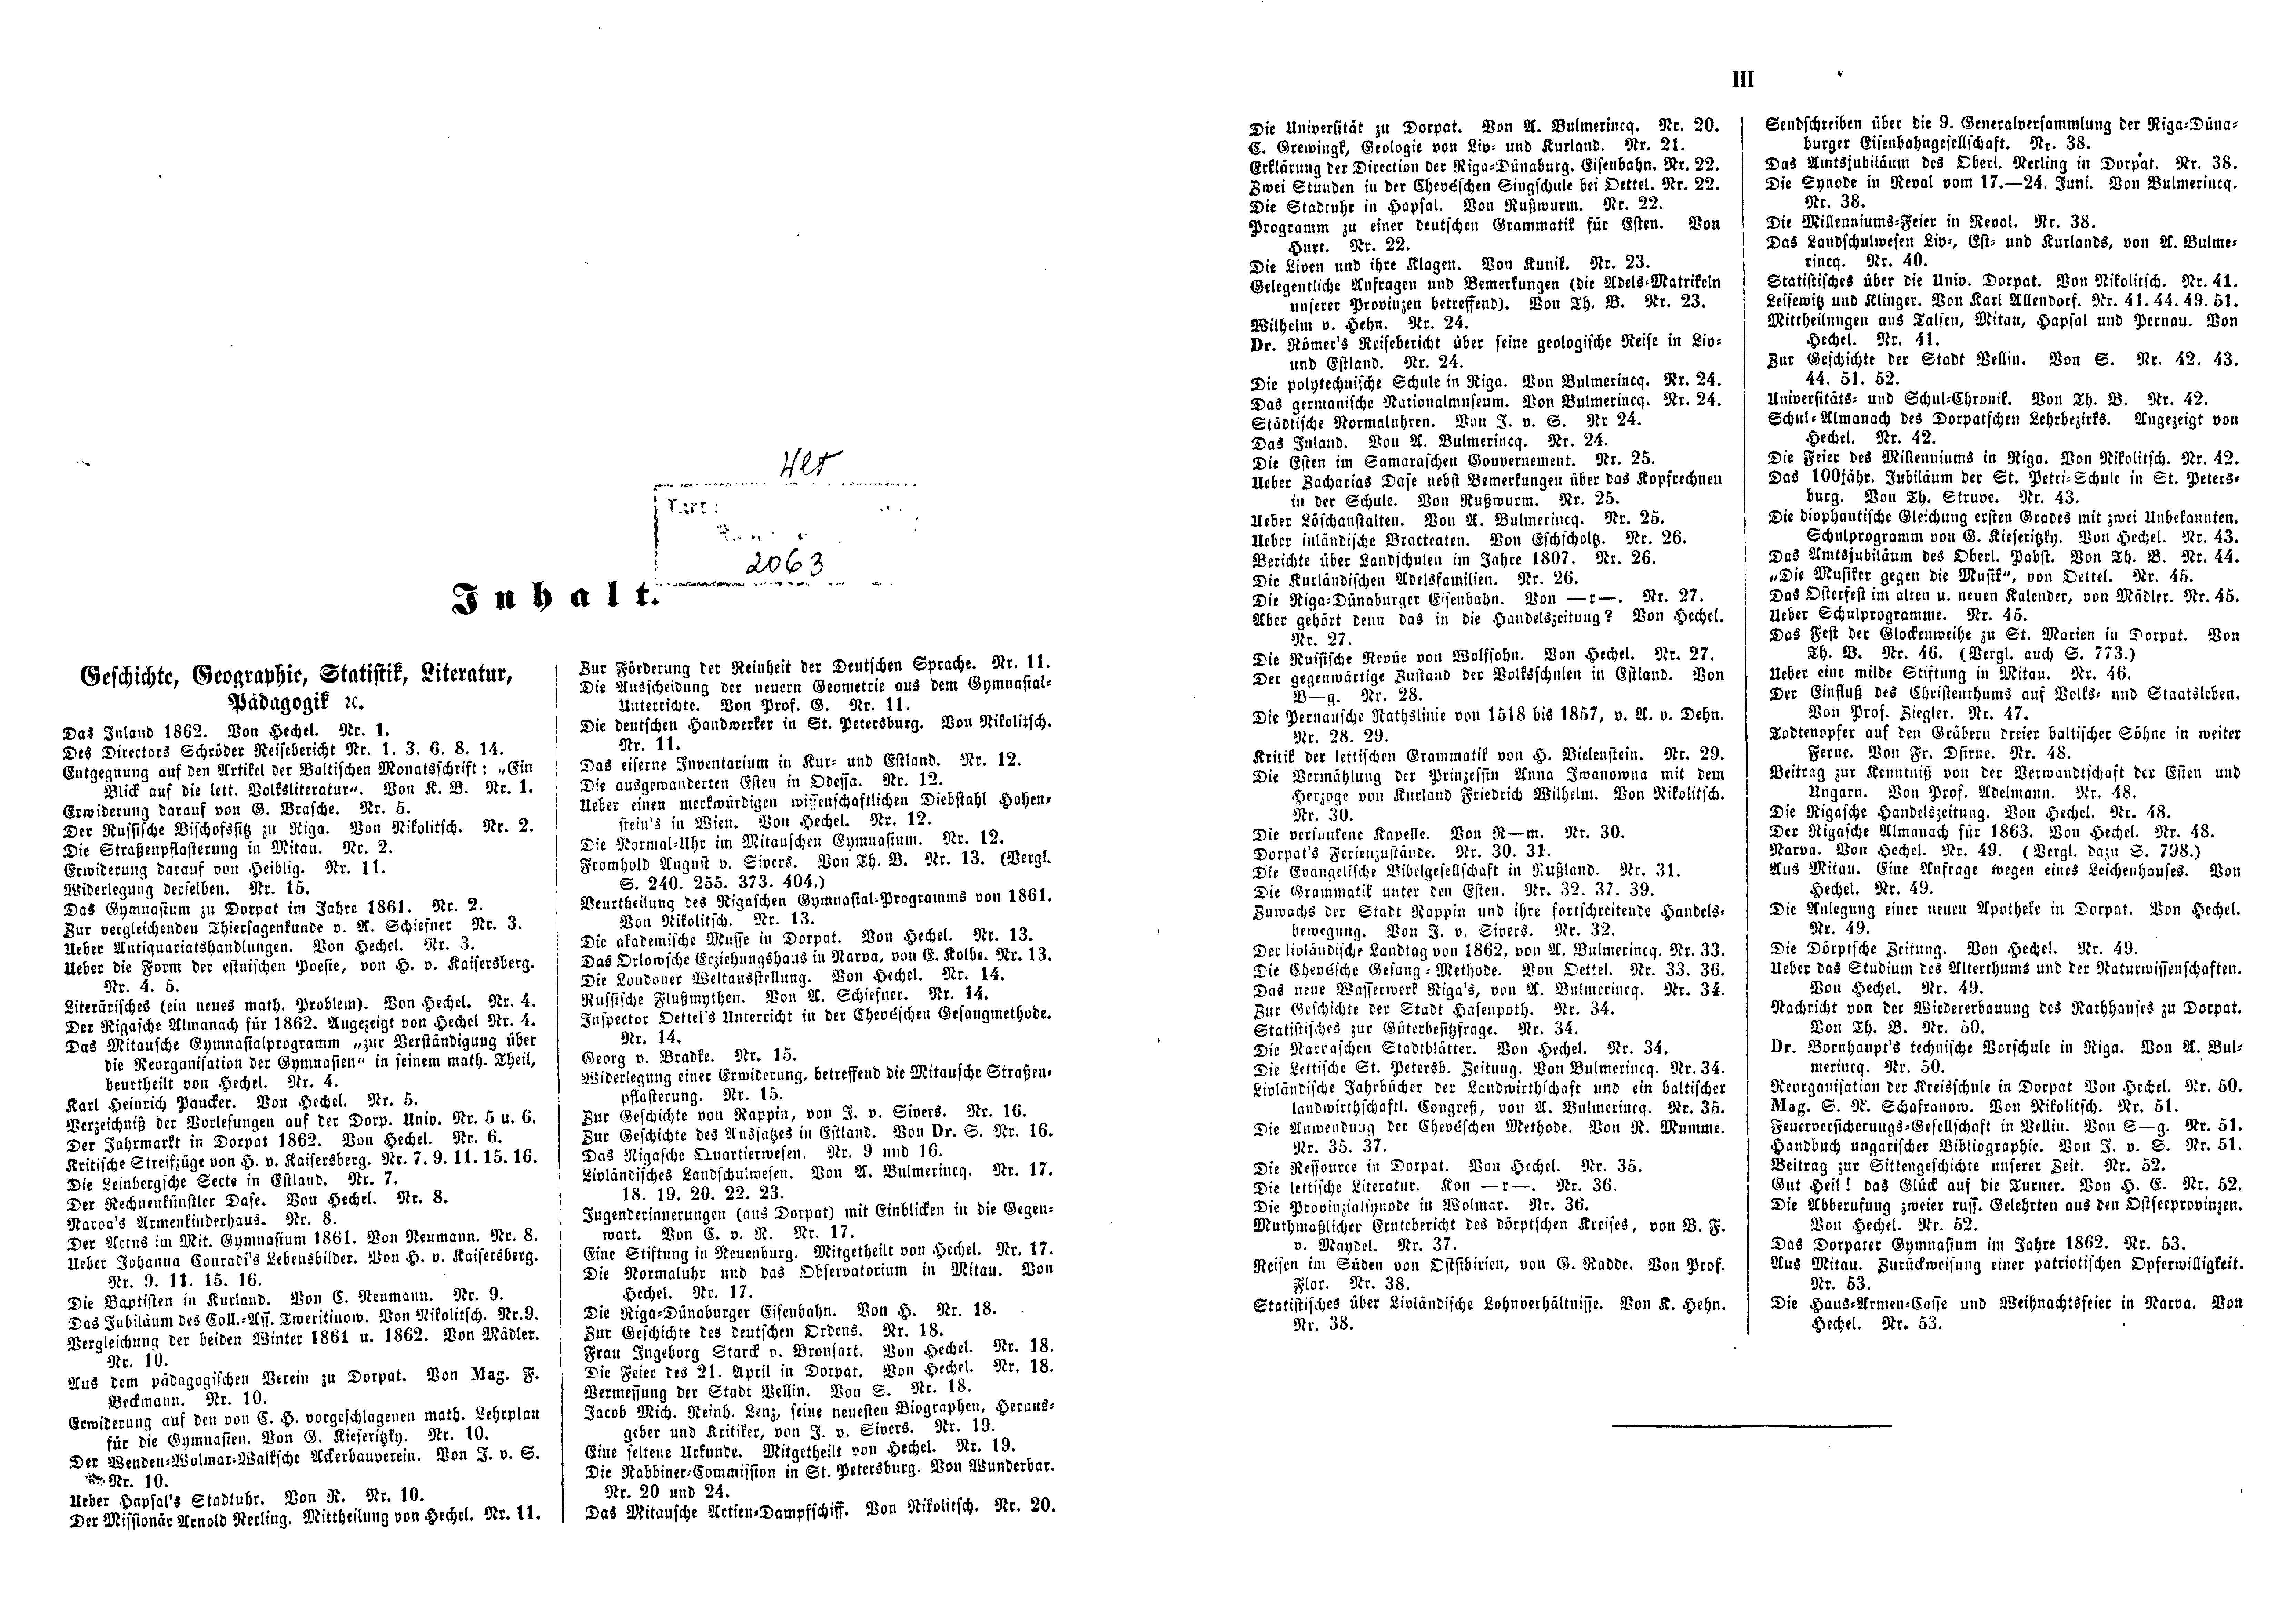 Das Inland [27] (1862) | 2. (II-III) Указатель